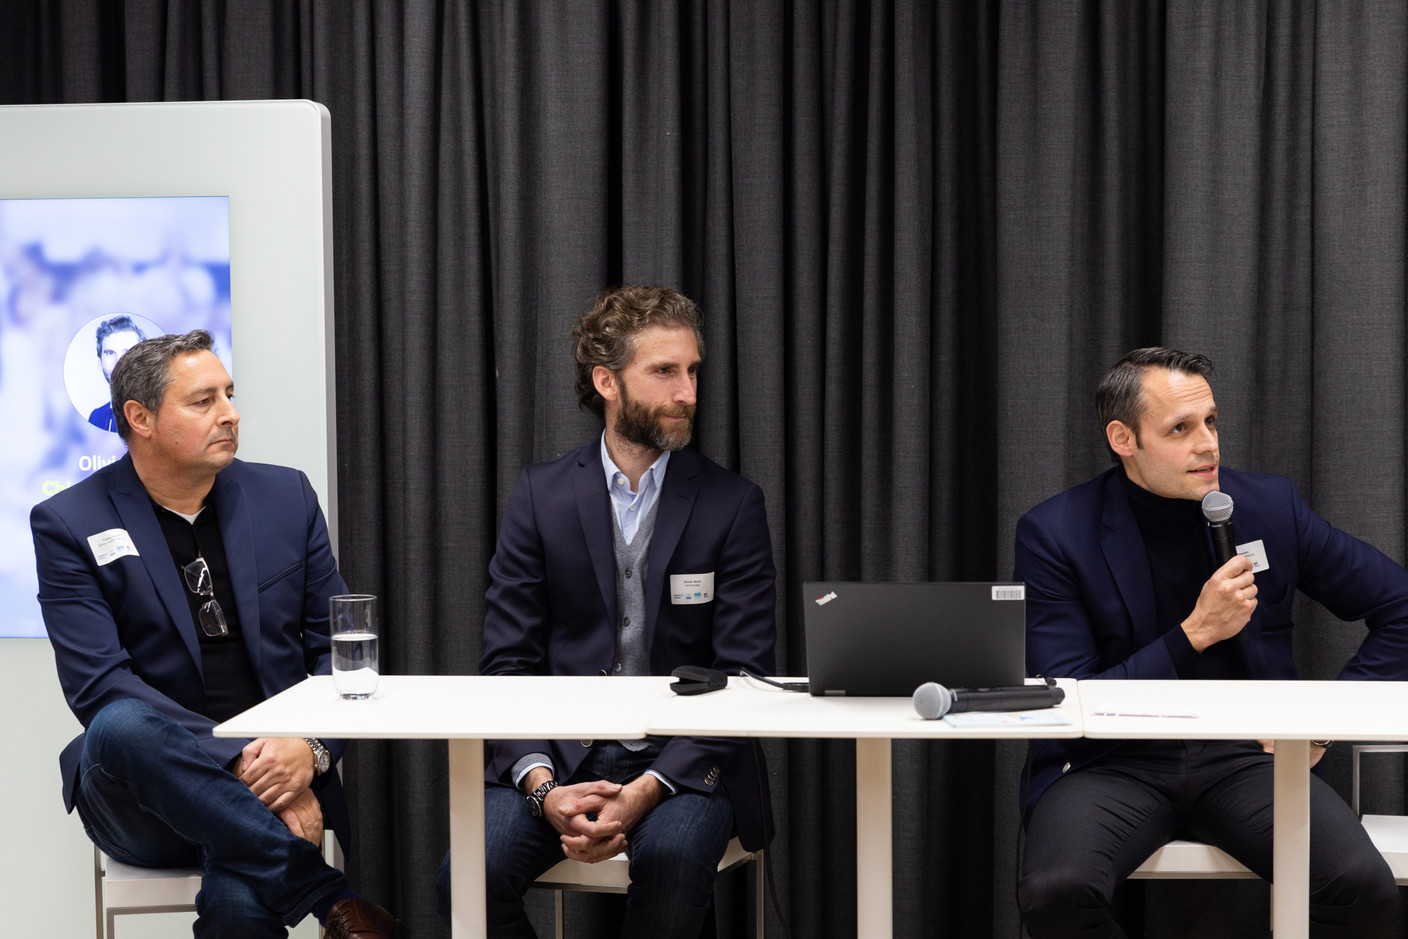 Tony Davis (White Castle), Olivier Binet (Innovorder) et Cyril Dreesen (Auchan) animaient la table ronde «How to scale up?». (Photo: Romain Gamba / Maison Moderne)